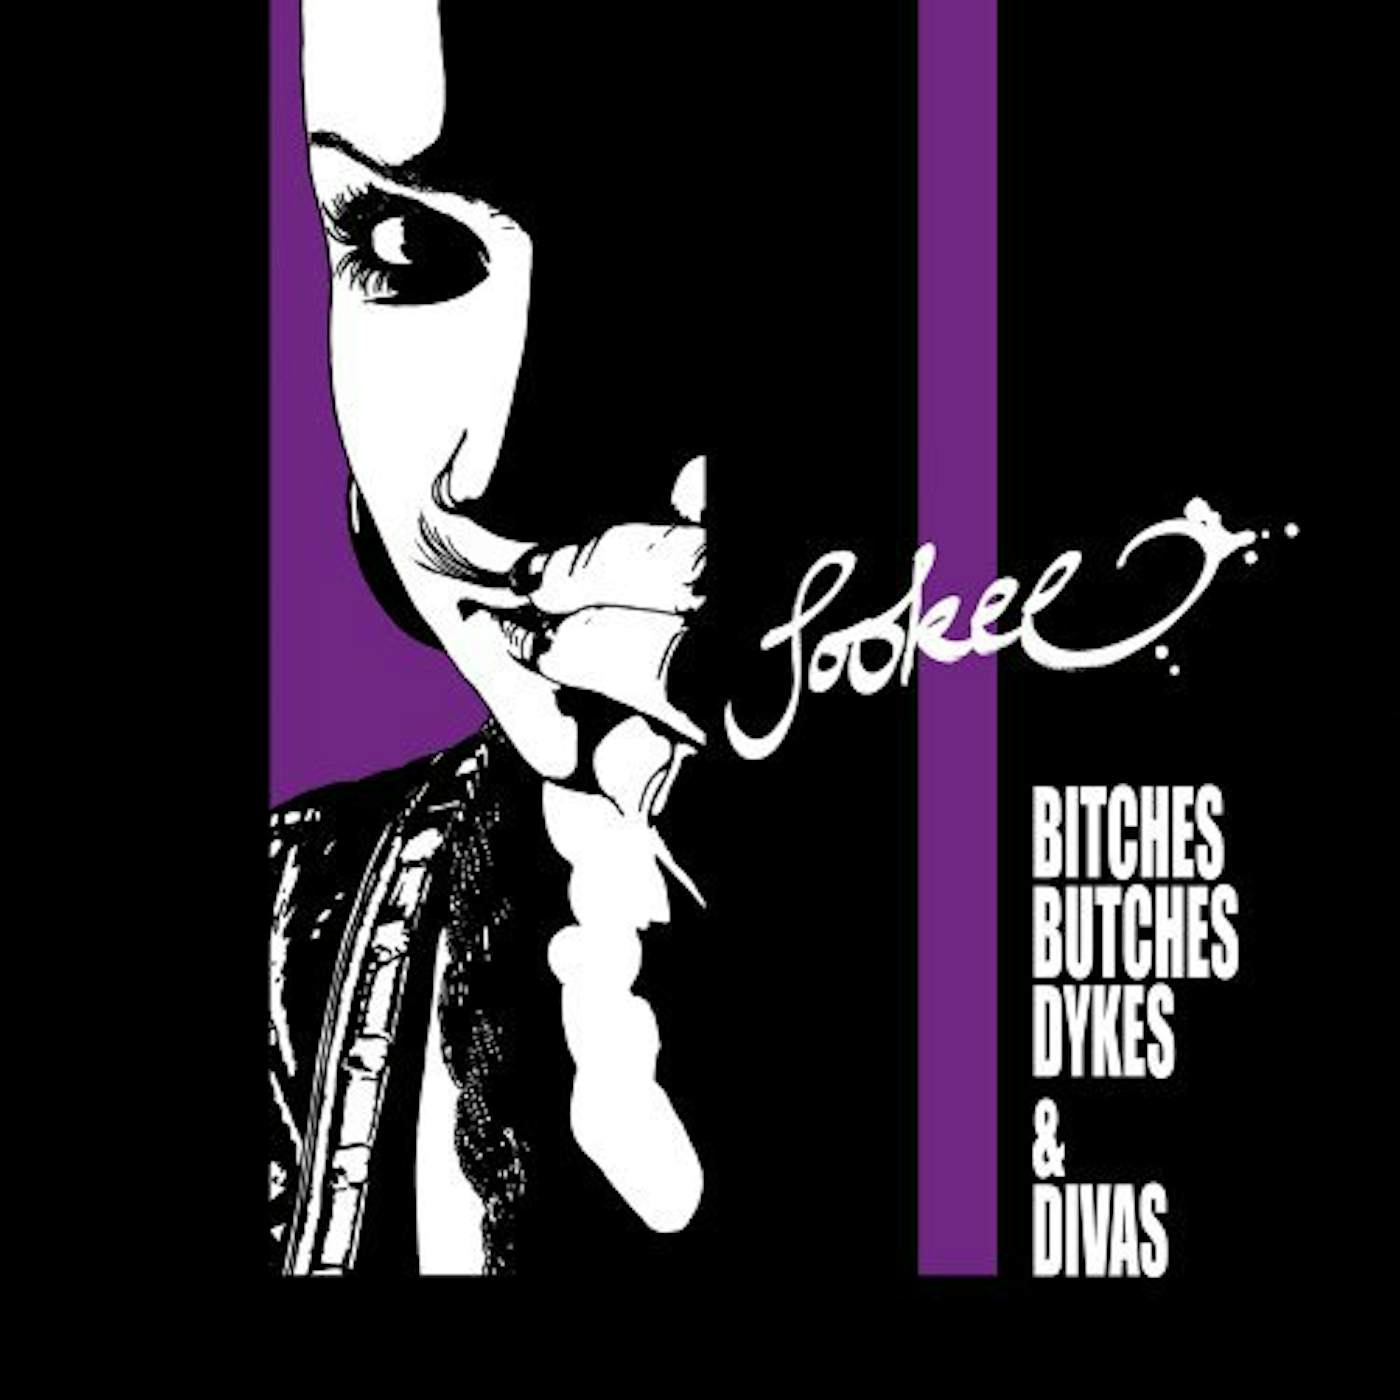 Sookee Bitches Butches Dykes & Divas Vinyl Record